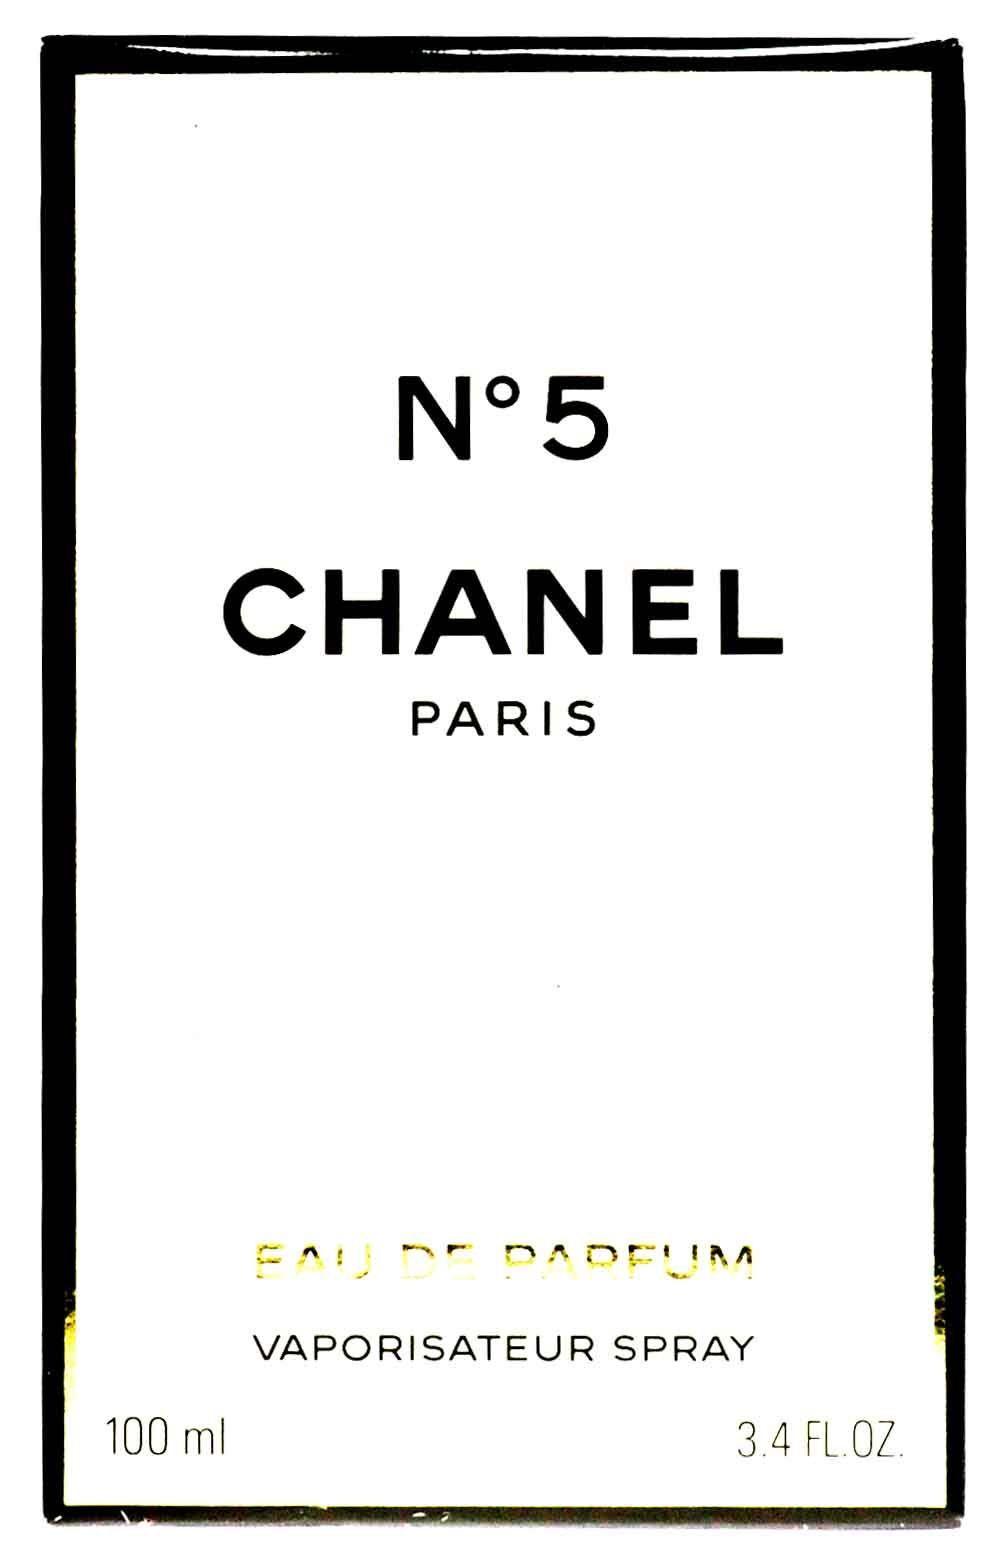 Chanel 5 Perfume Logo - Chanel no 5 Logos